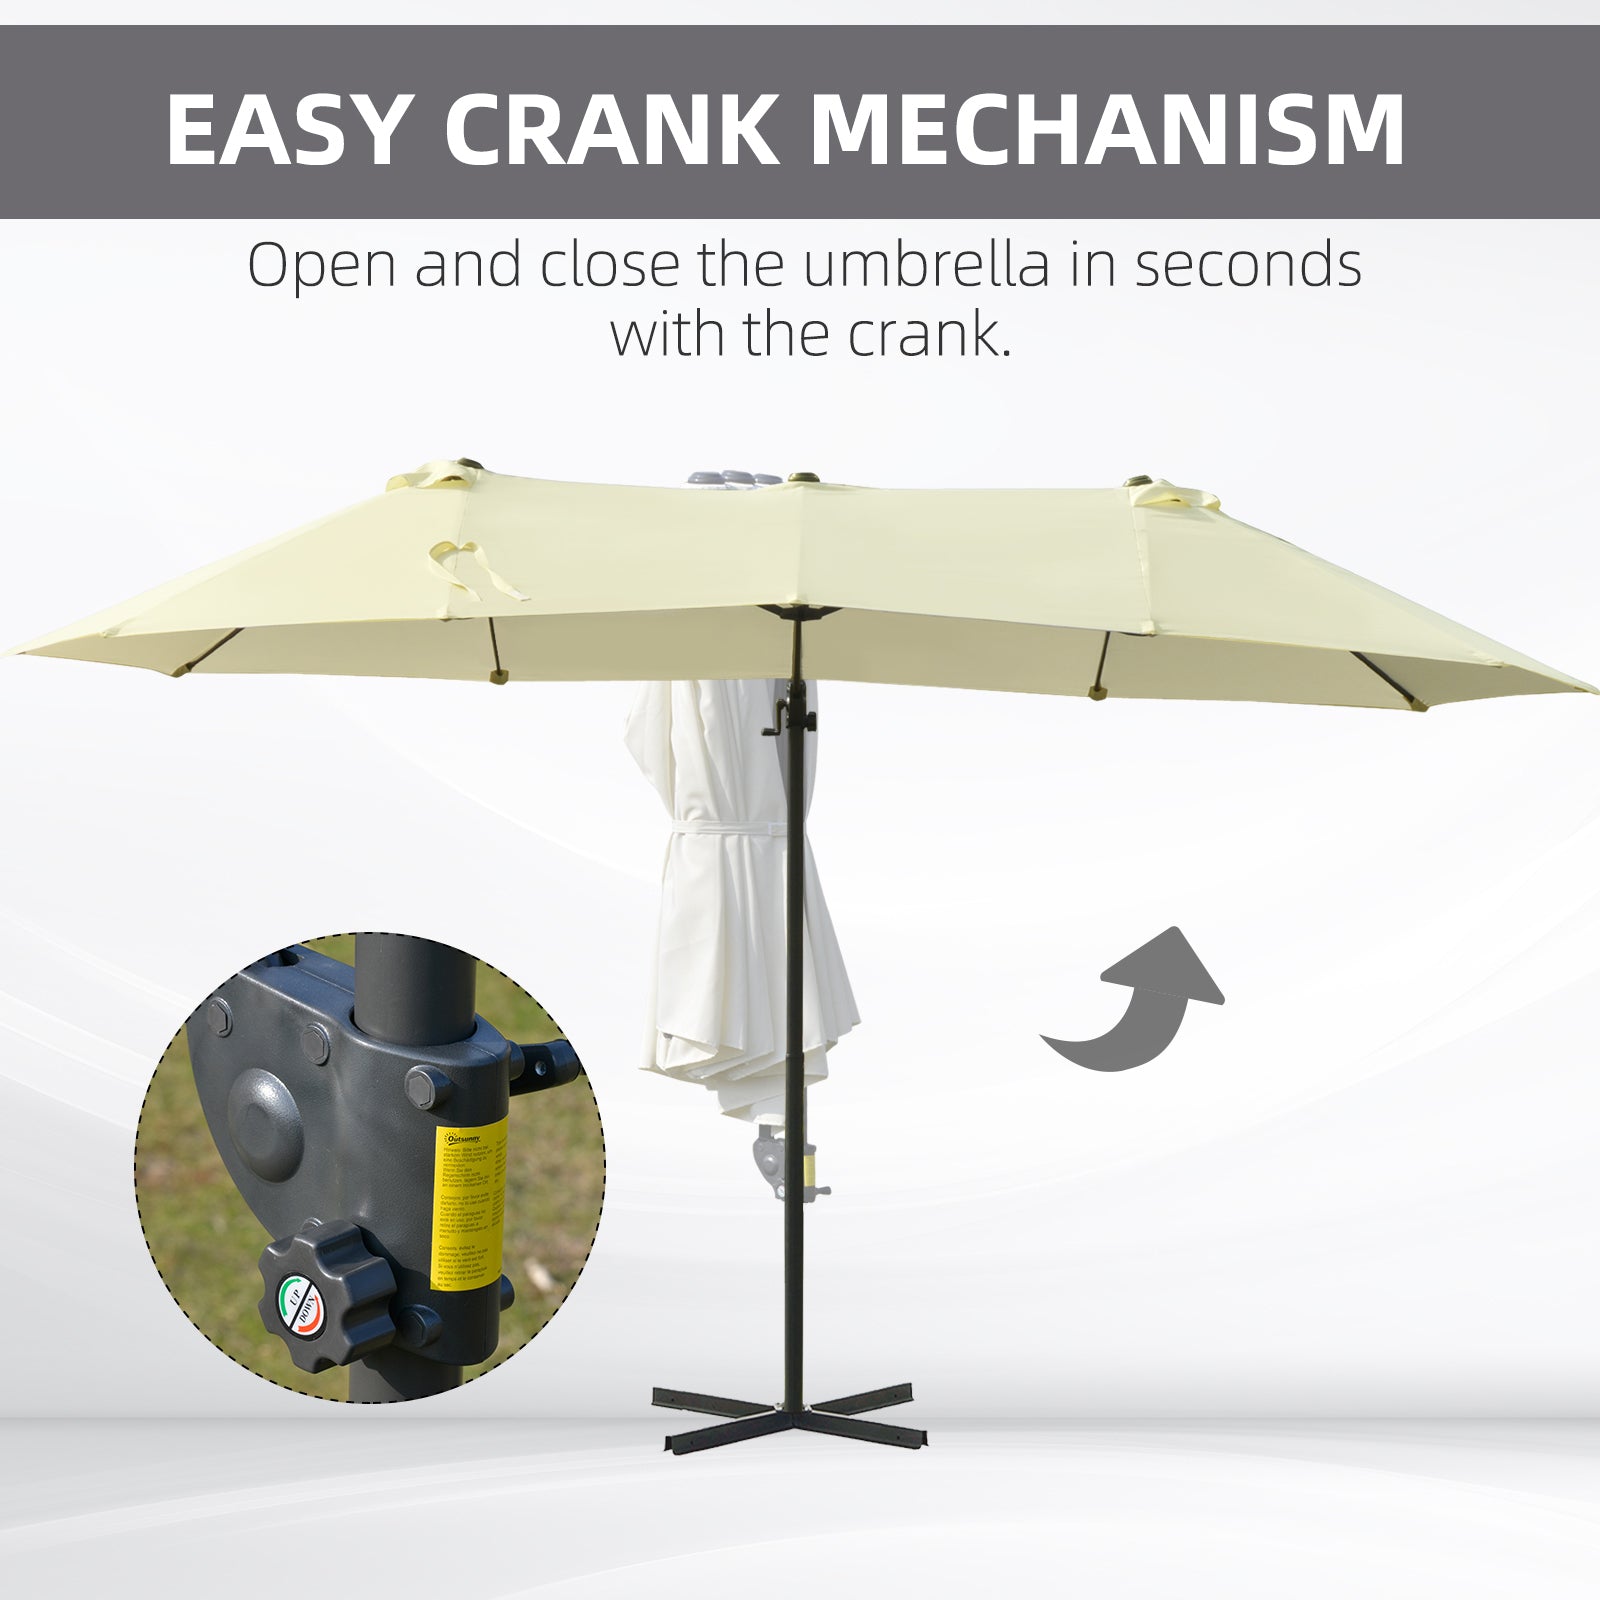 Outdoor Patio Umbrella Offset Cantilever Umbrella with Twin Canopy Sunshade Umbrella with Lift Beige Cantilever Umbrellas   at Gallery Canada